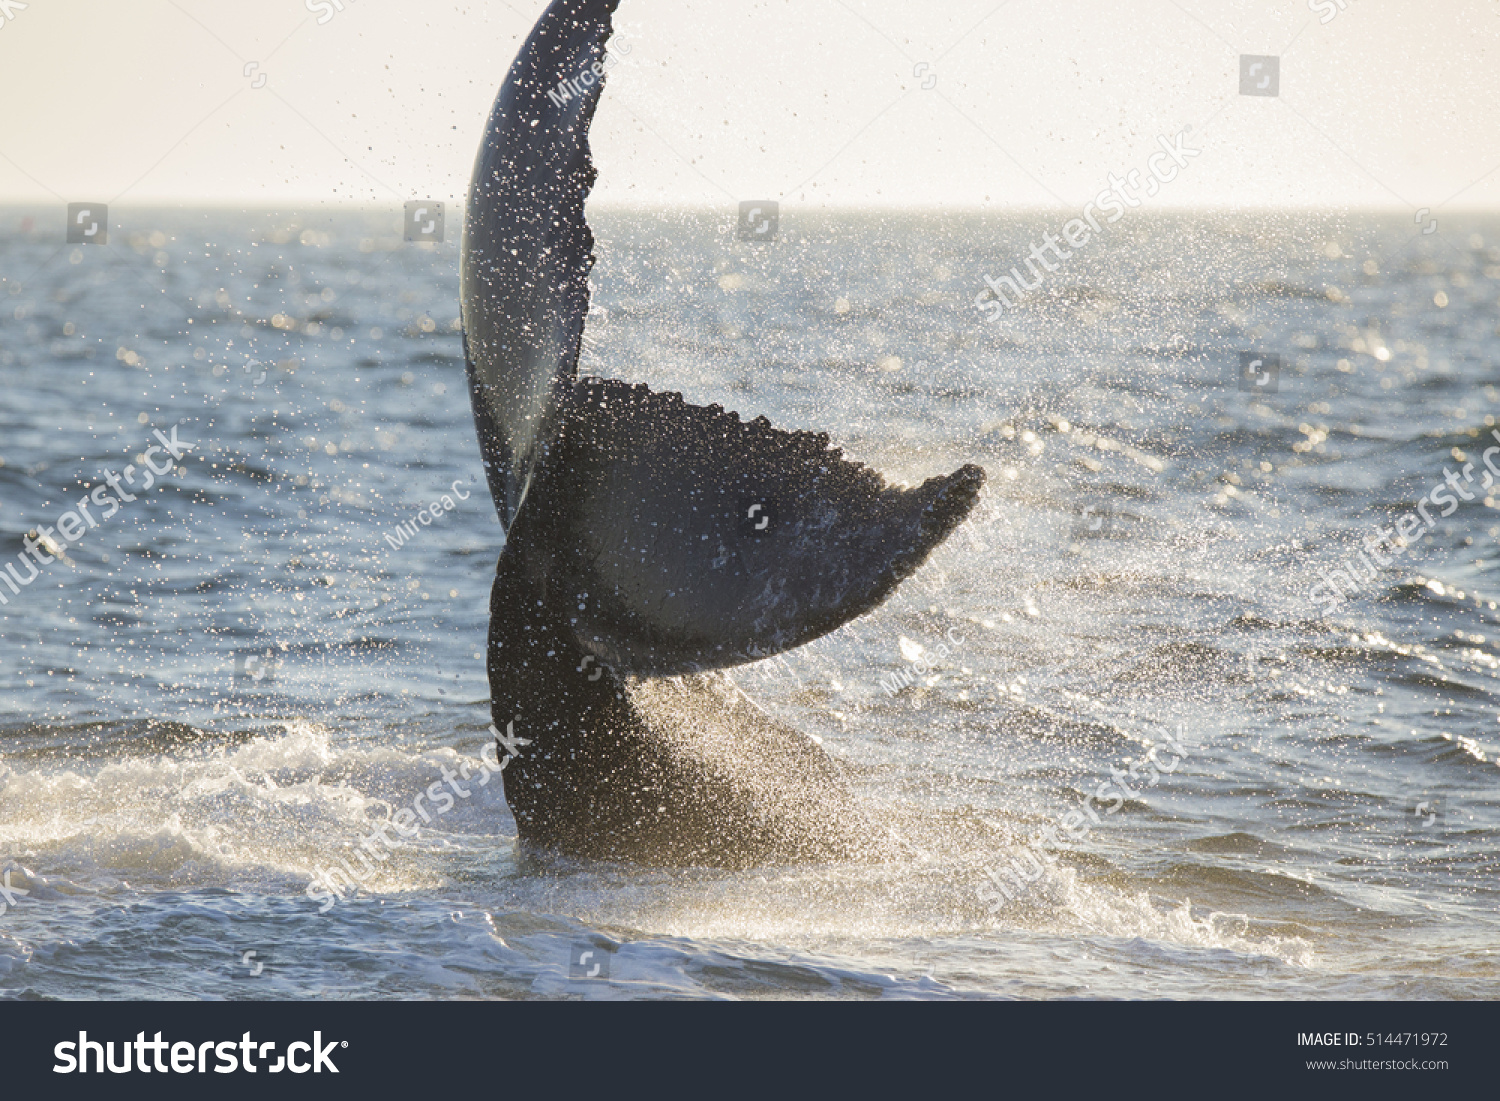 Humpback Whale (Megaptera novaeangliae) Breaching-Cape Cod, Massachusetts #514471972